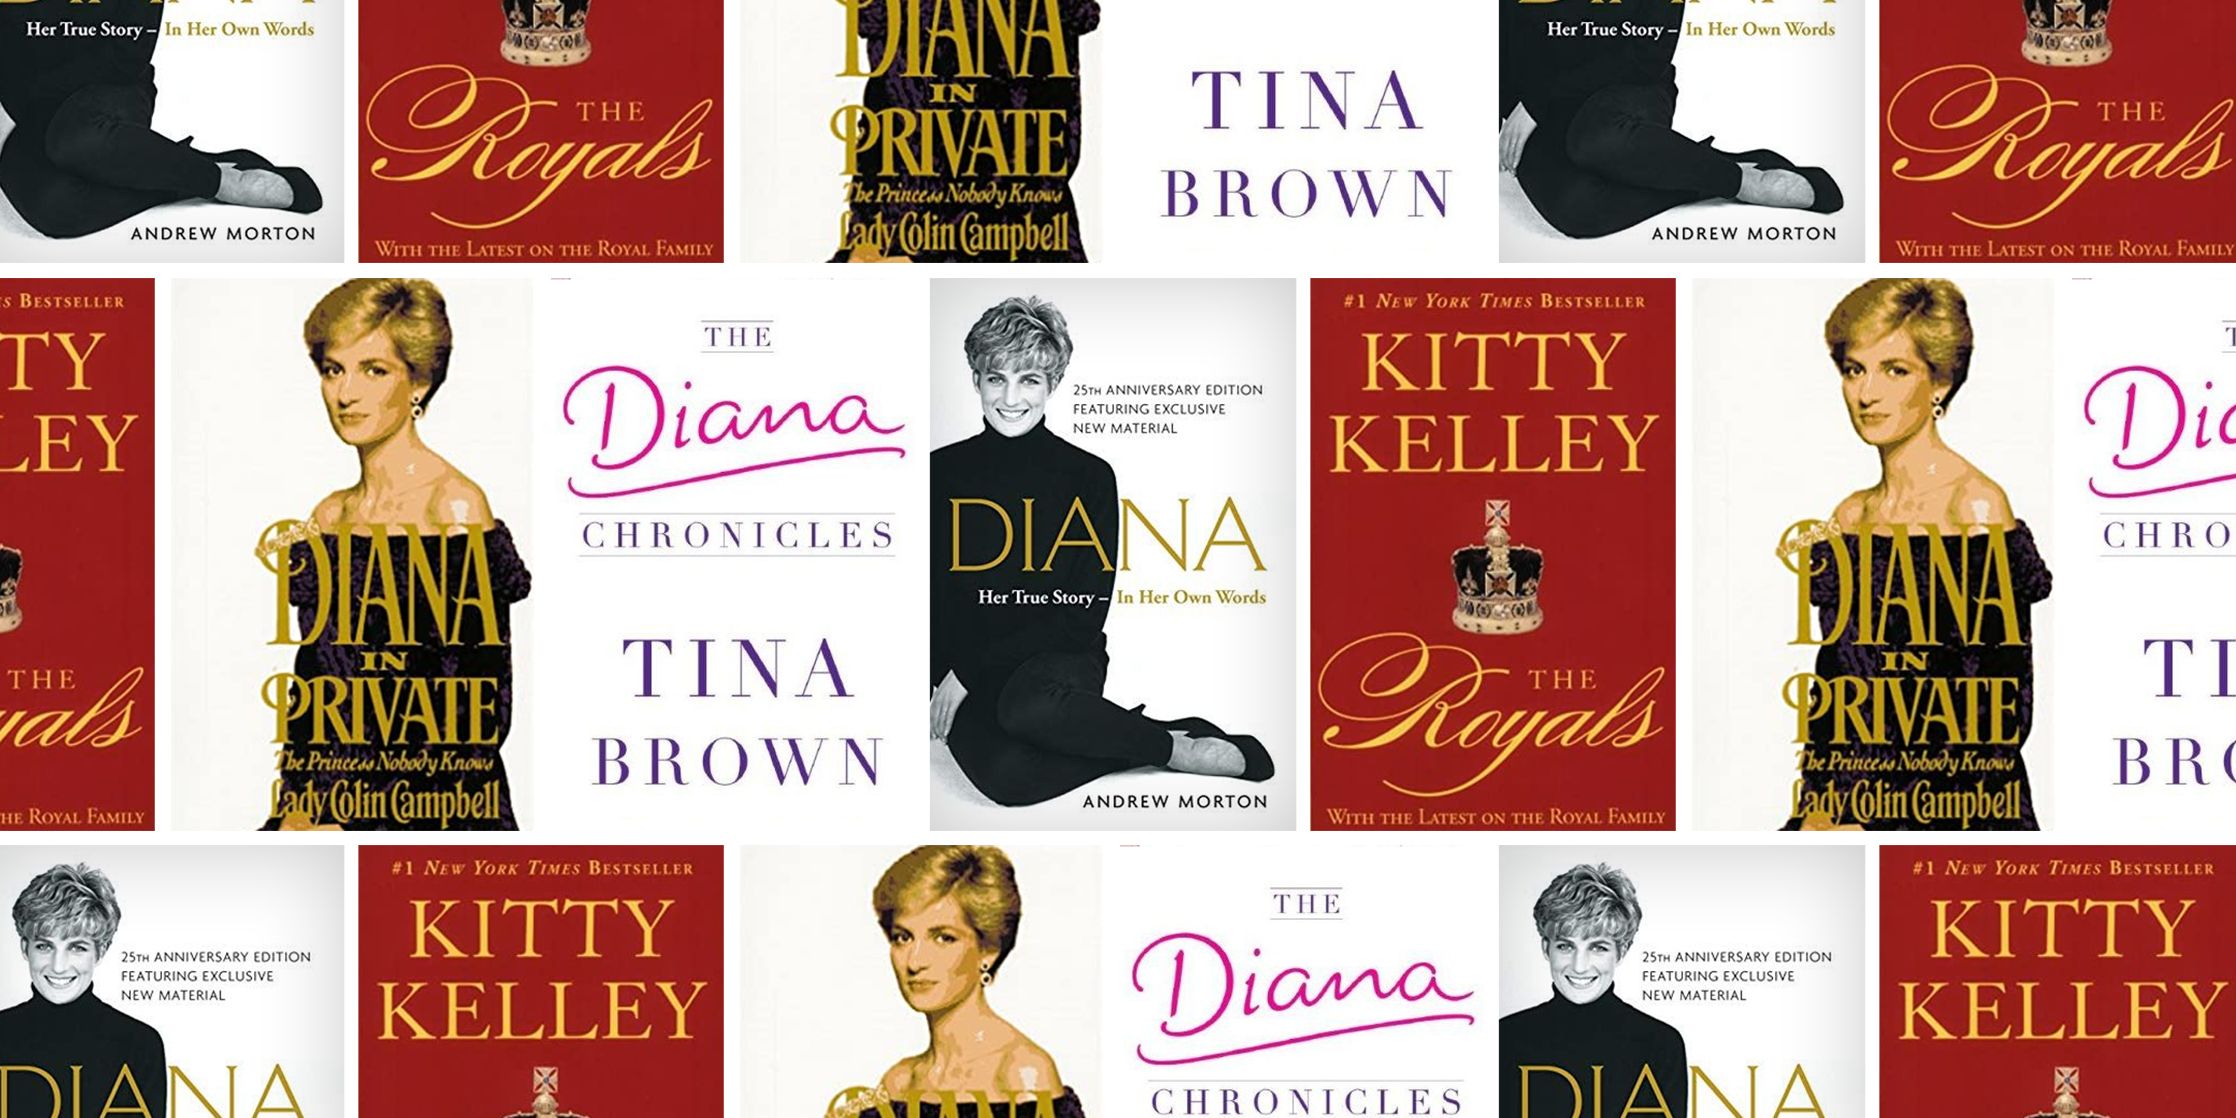 The Diana I Knew by Mary Robertson